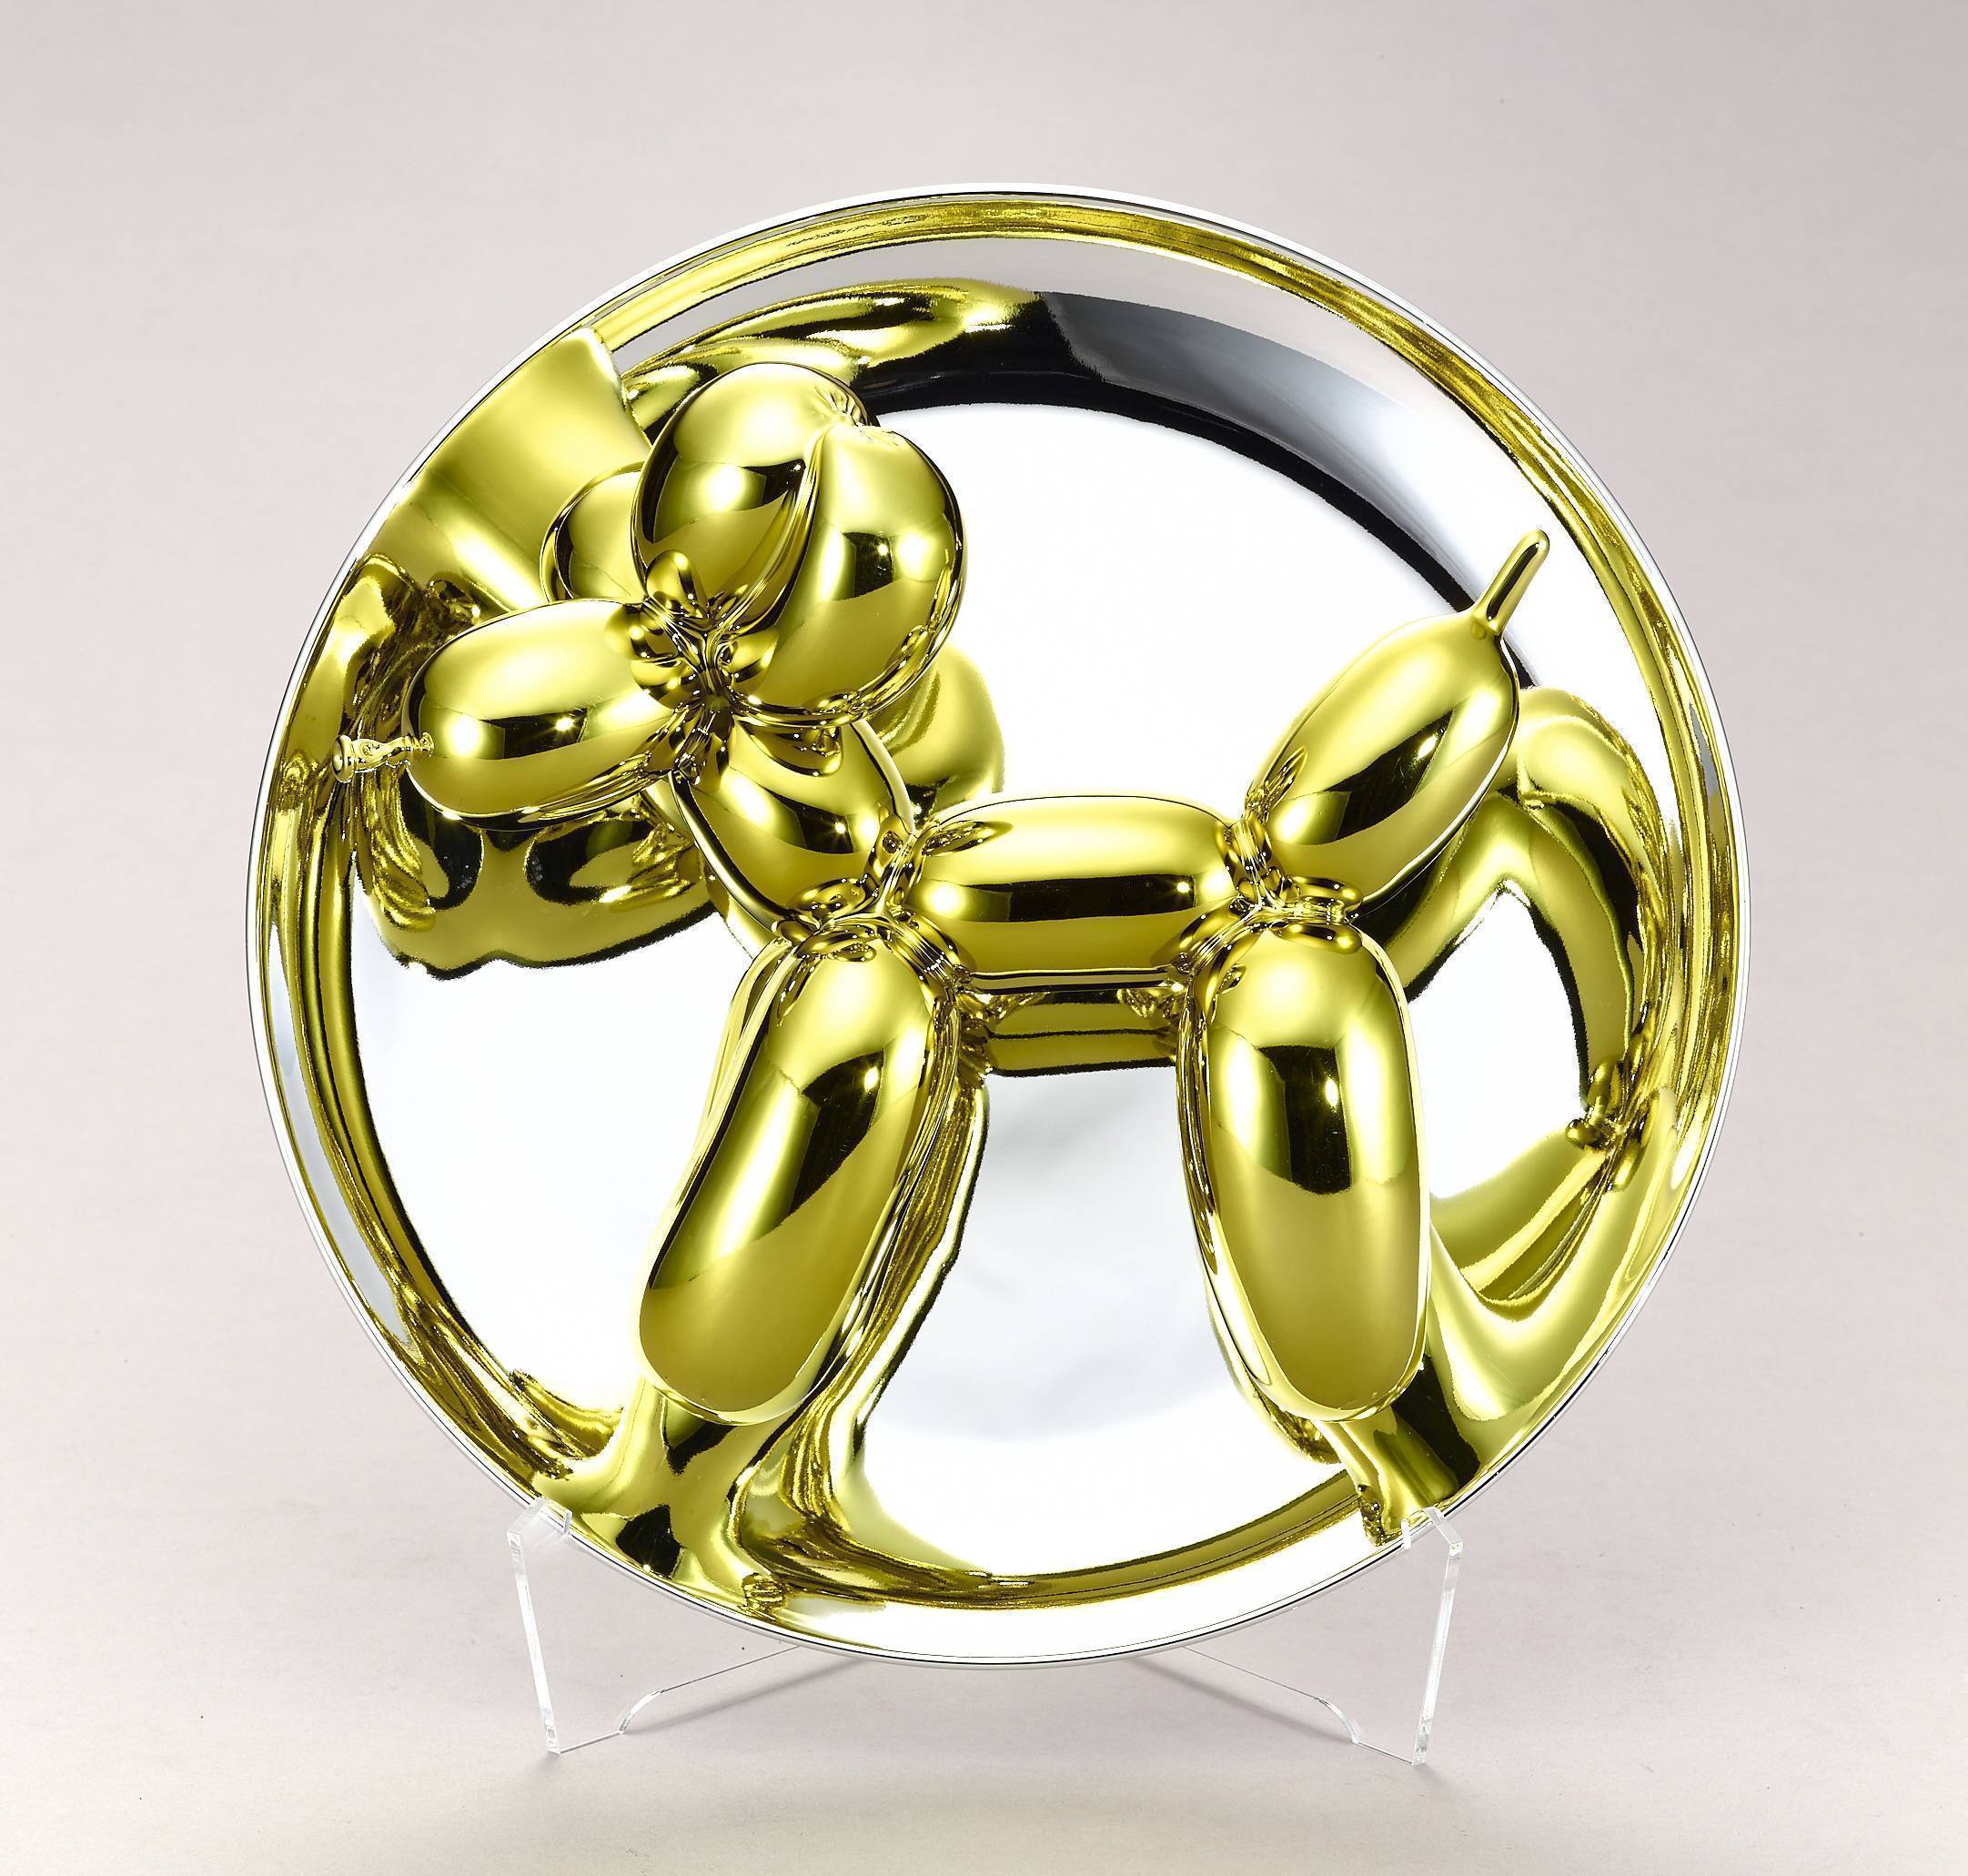 Balloon Dog (yellow) 氣球狗 (黃金) 26.7 x 26.7 x 12.7 cm Porcelain 陶瓷 2015 © Jeff Koons